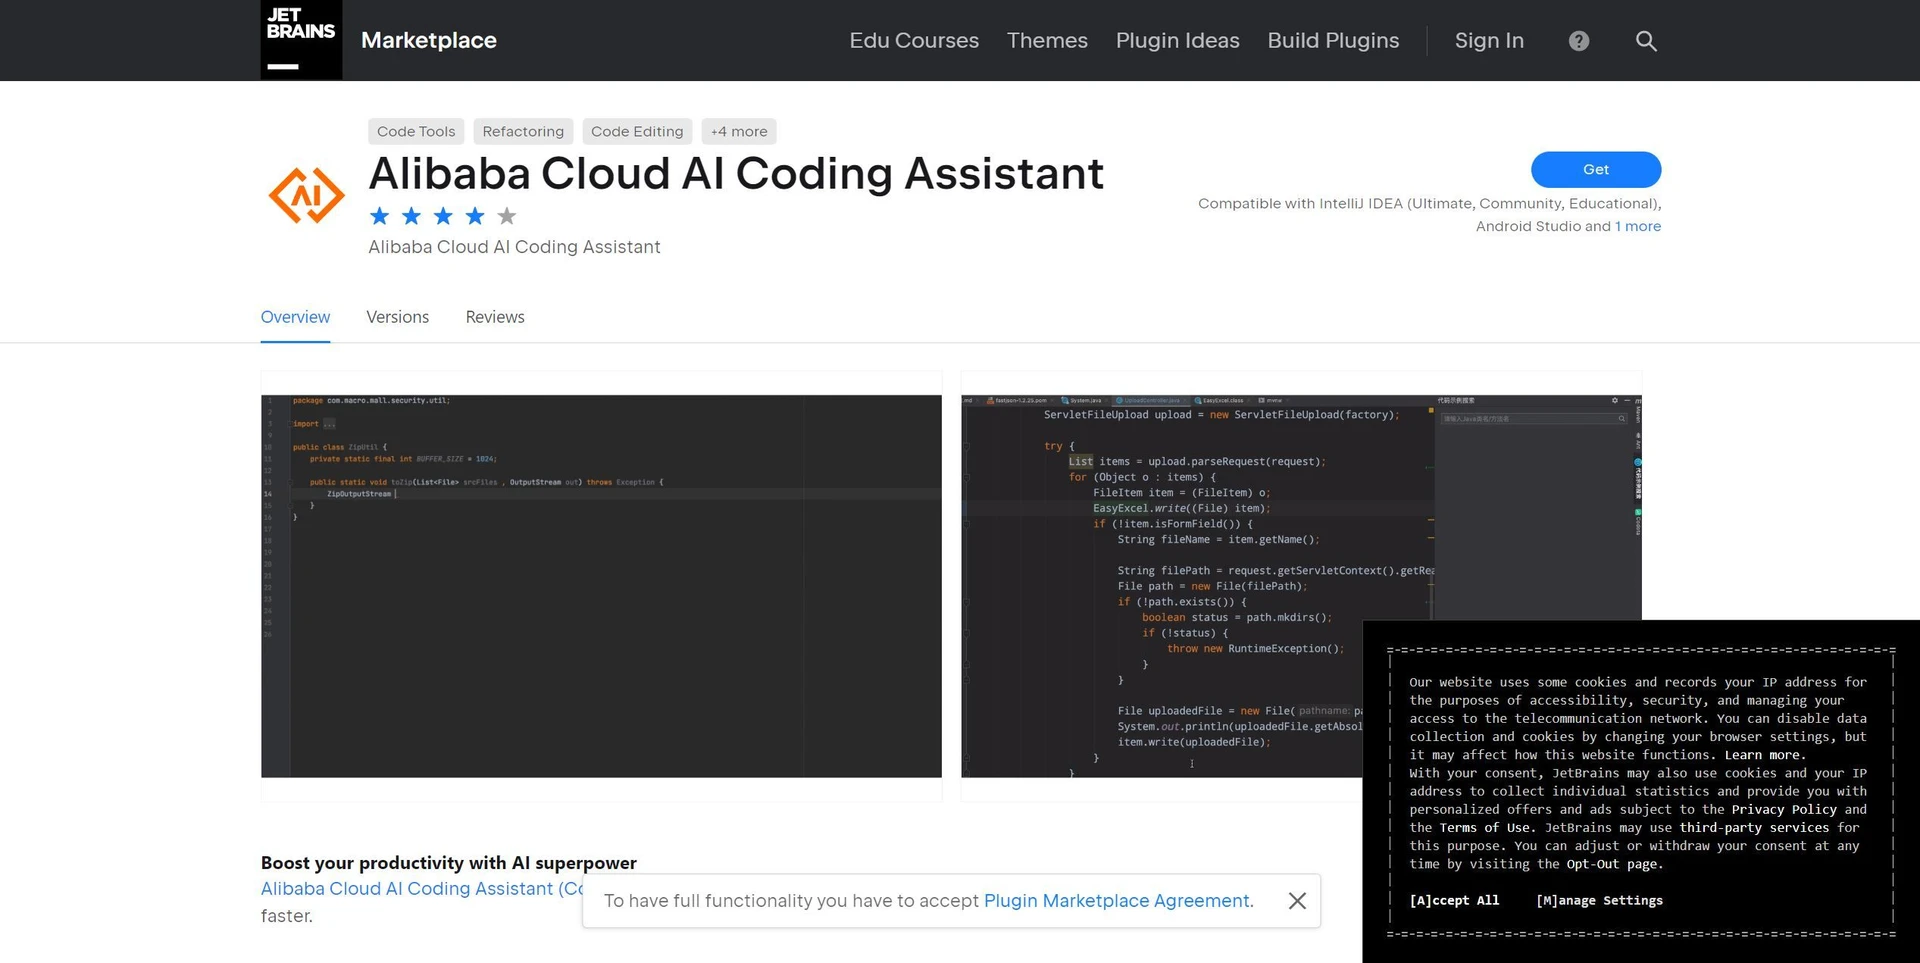 Alibaba Cloud AI Coding Assistantwebsite picture